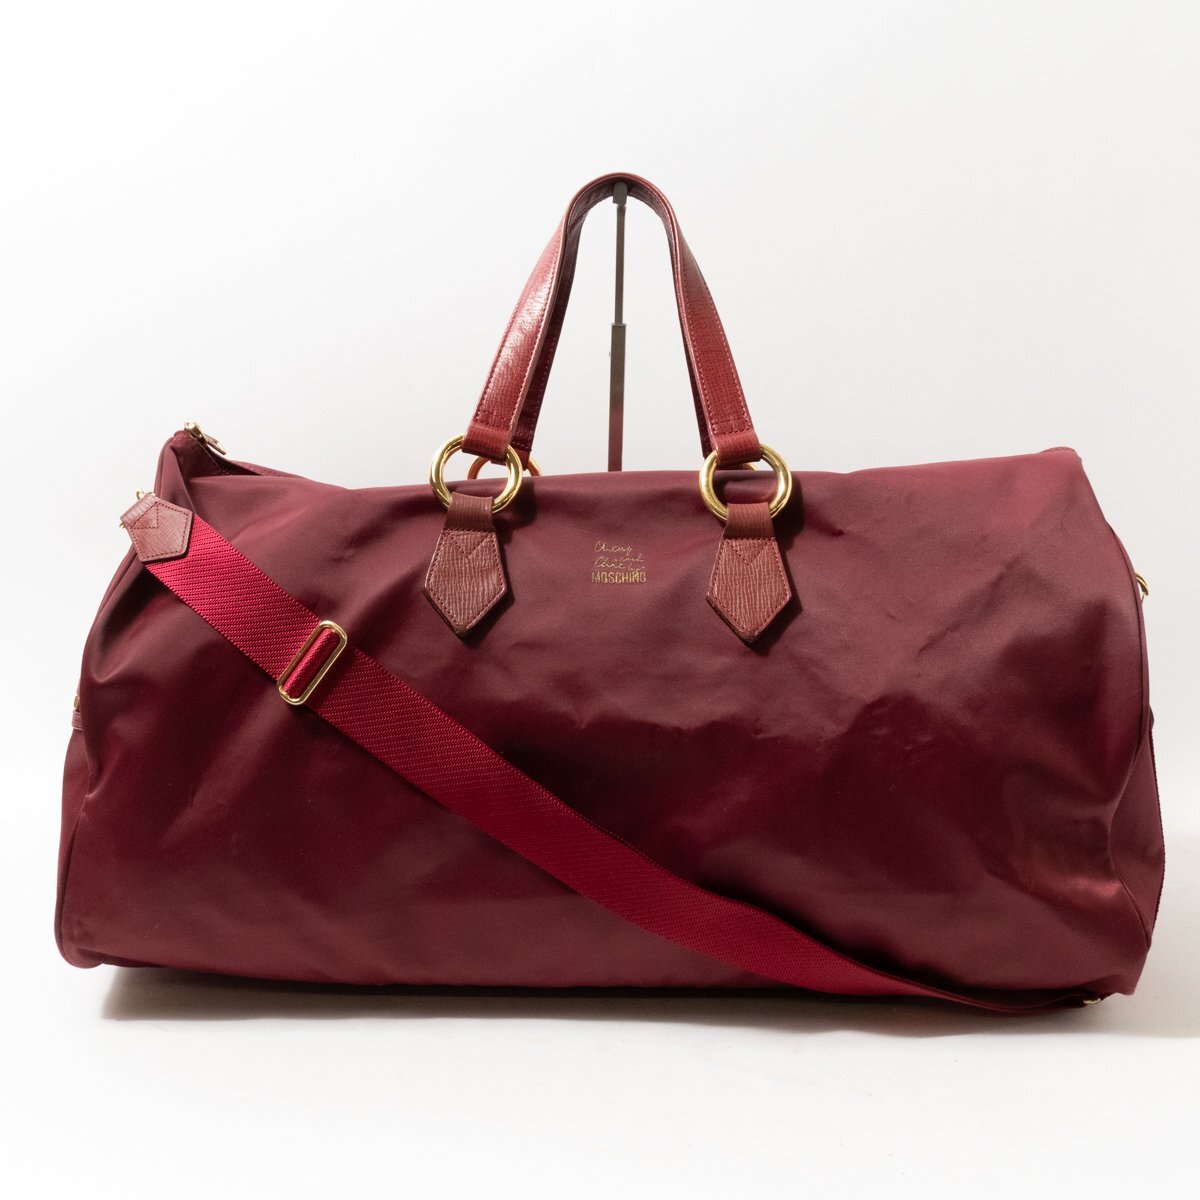 MOSCHINO Moschino Boston bag bordeaux Gold nylon leather lady's diagonal .. hand .. high capacity travel casual bag bag 